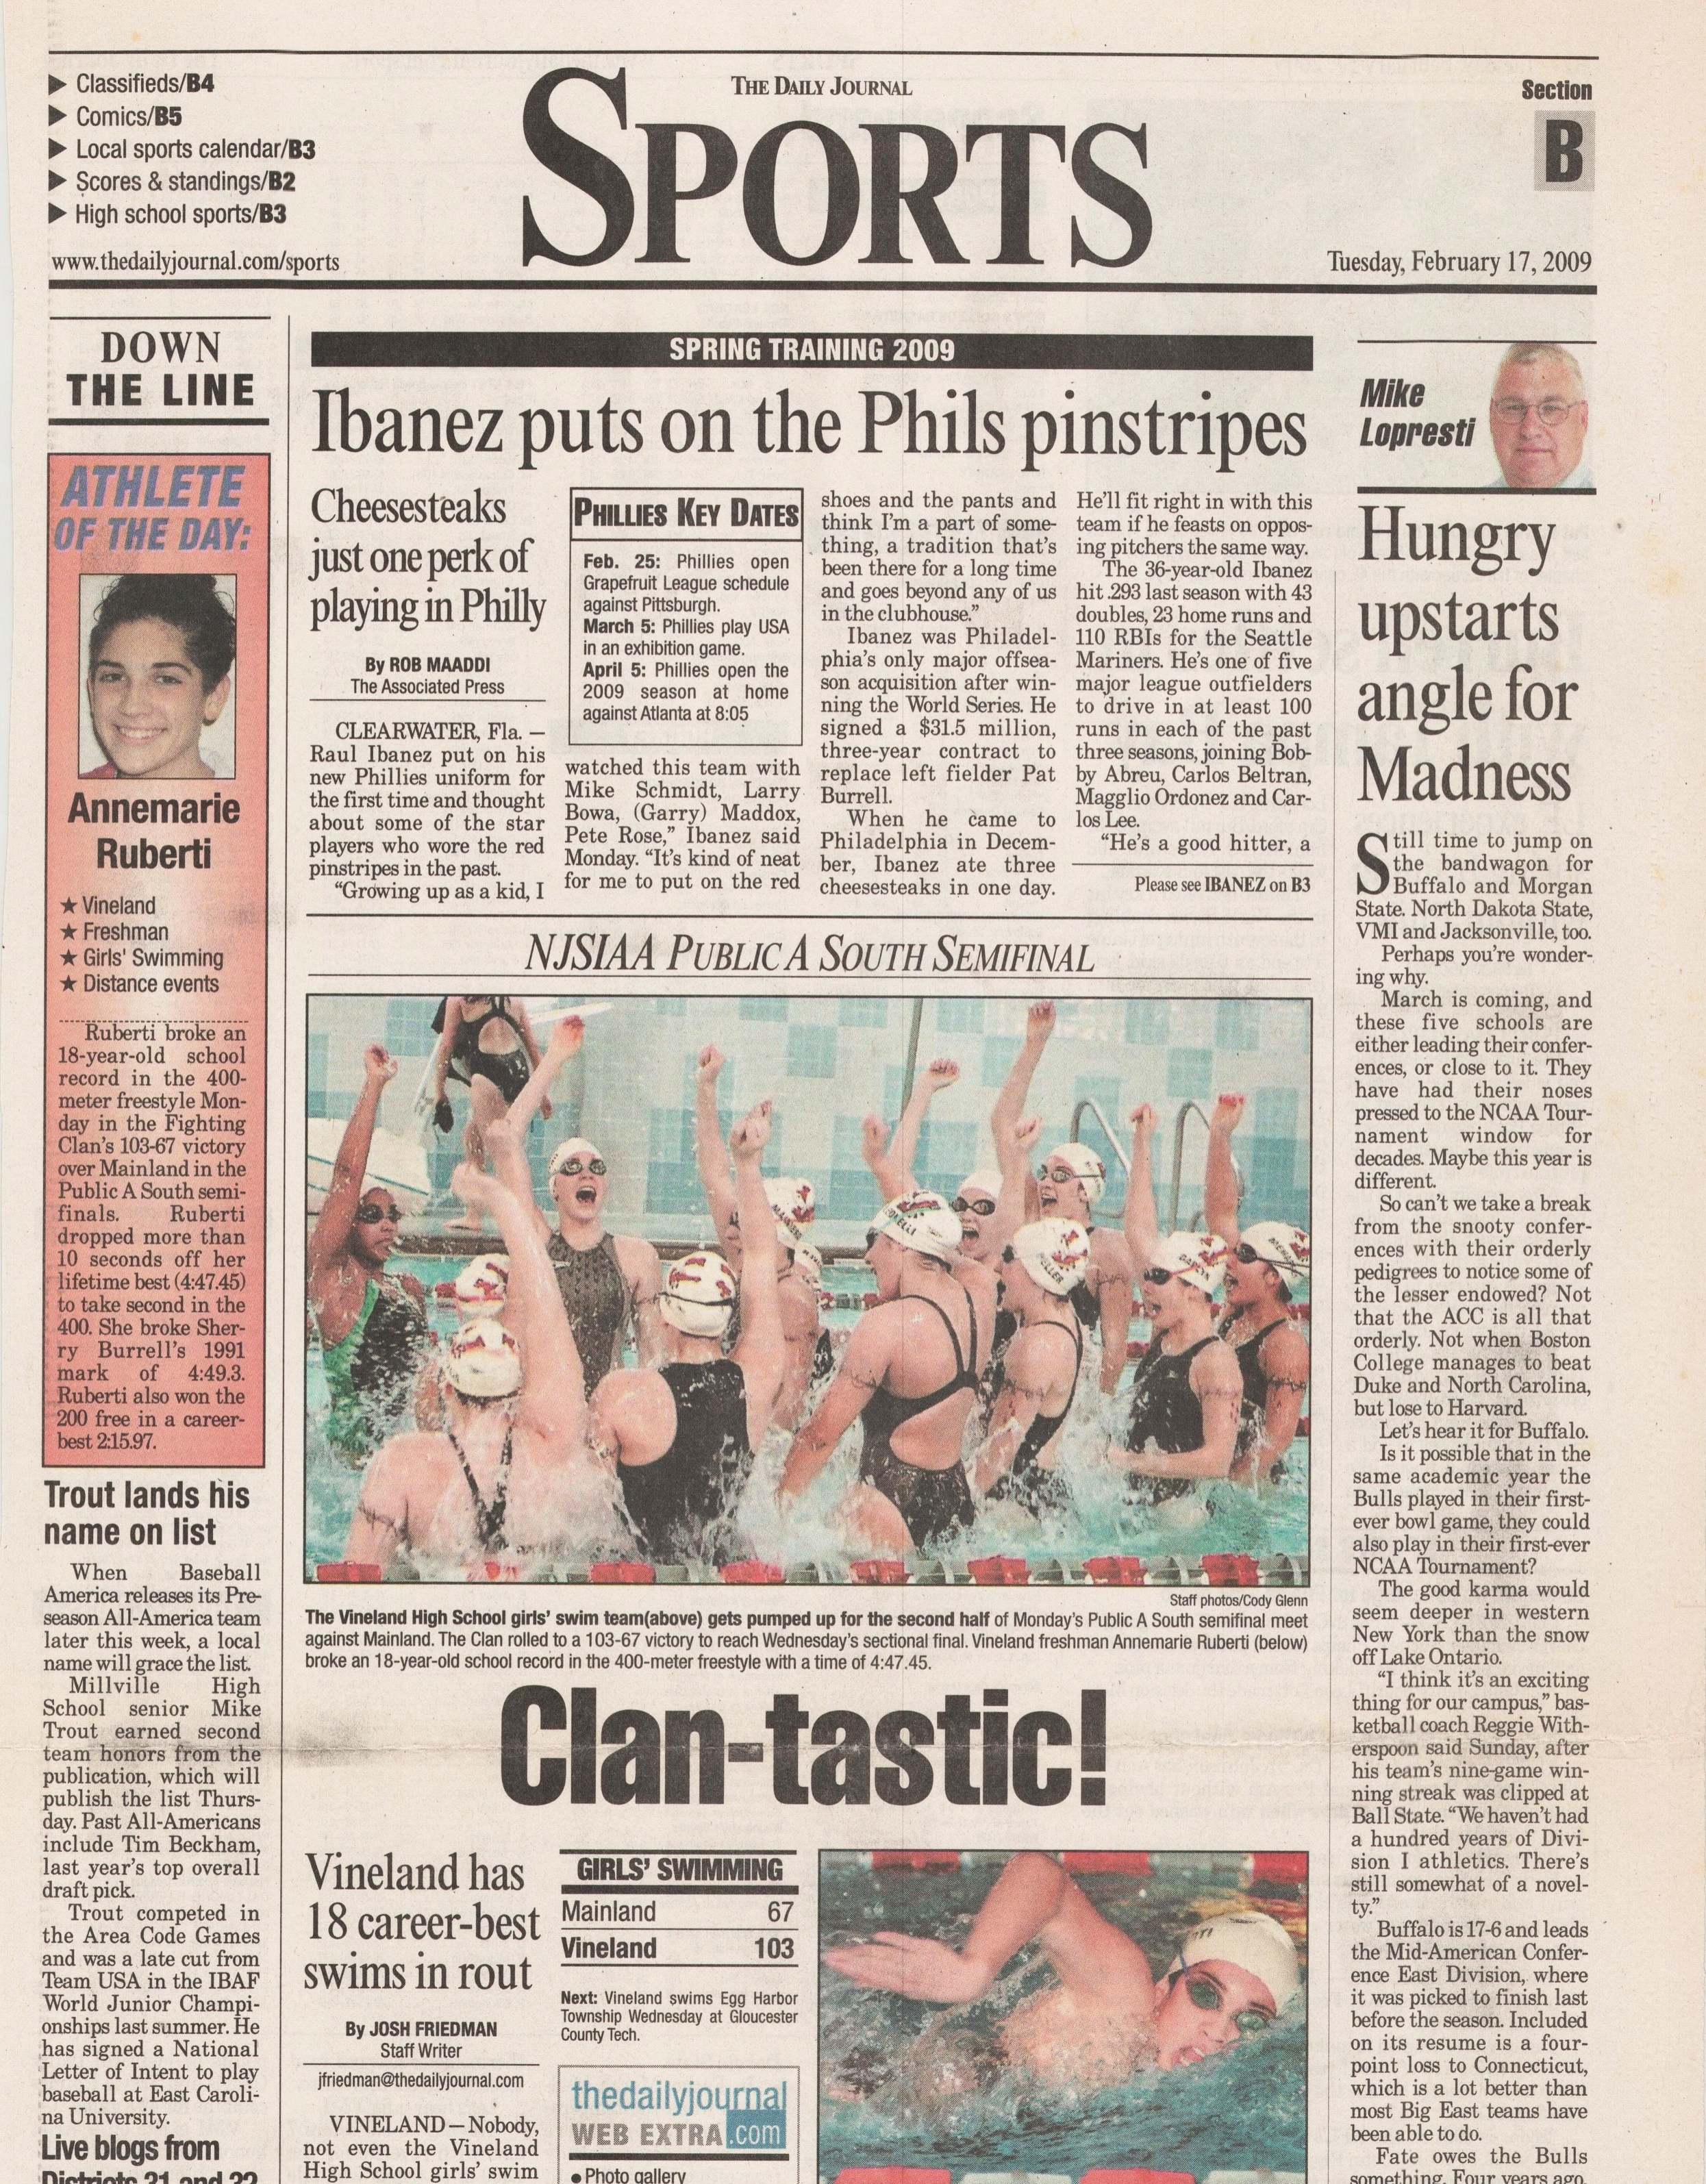  Vineland v Mainland girls swimming February 17, 2009 /  The Daily Journal  